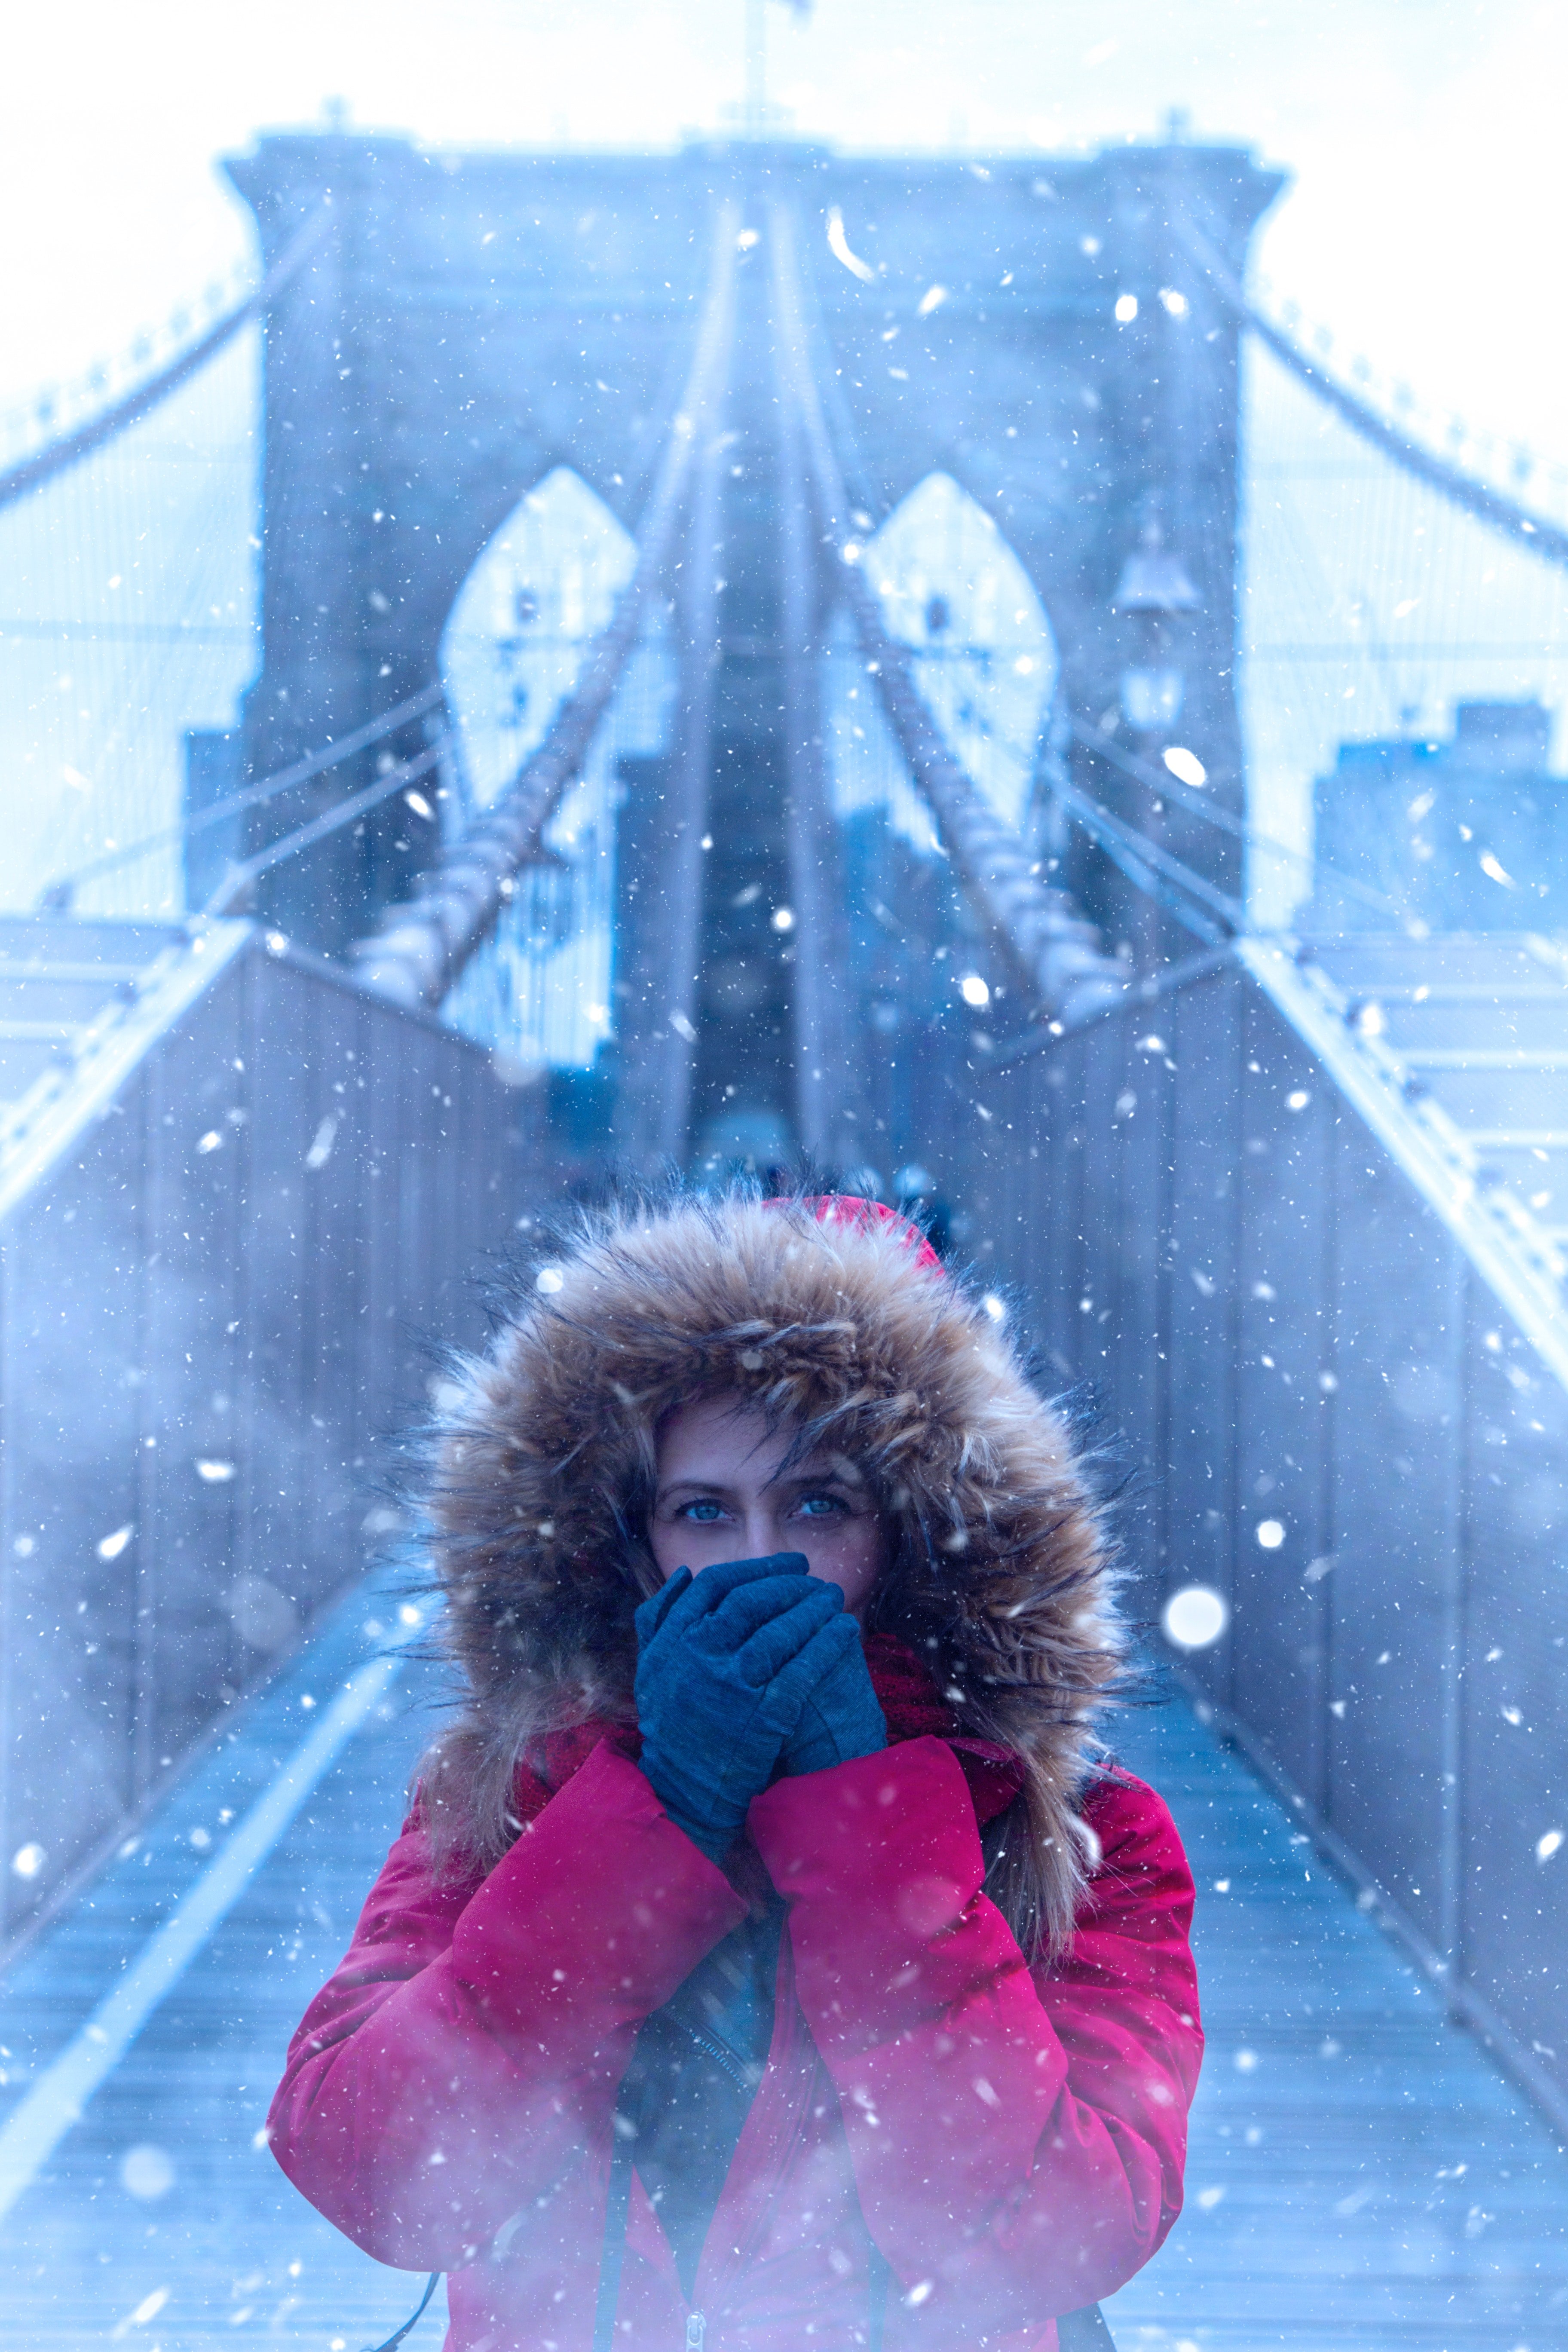 Snowfall On Brooklyn Bridge | Source: Andre Furtado/Pexels